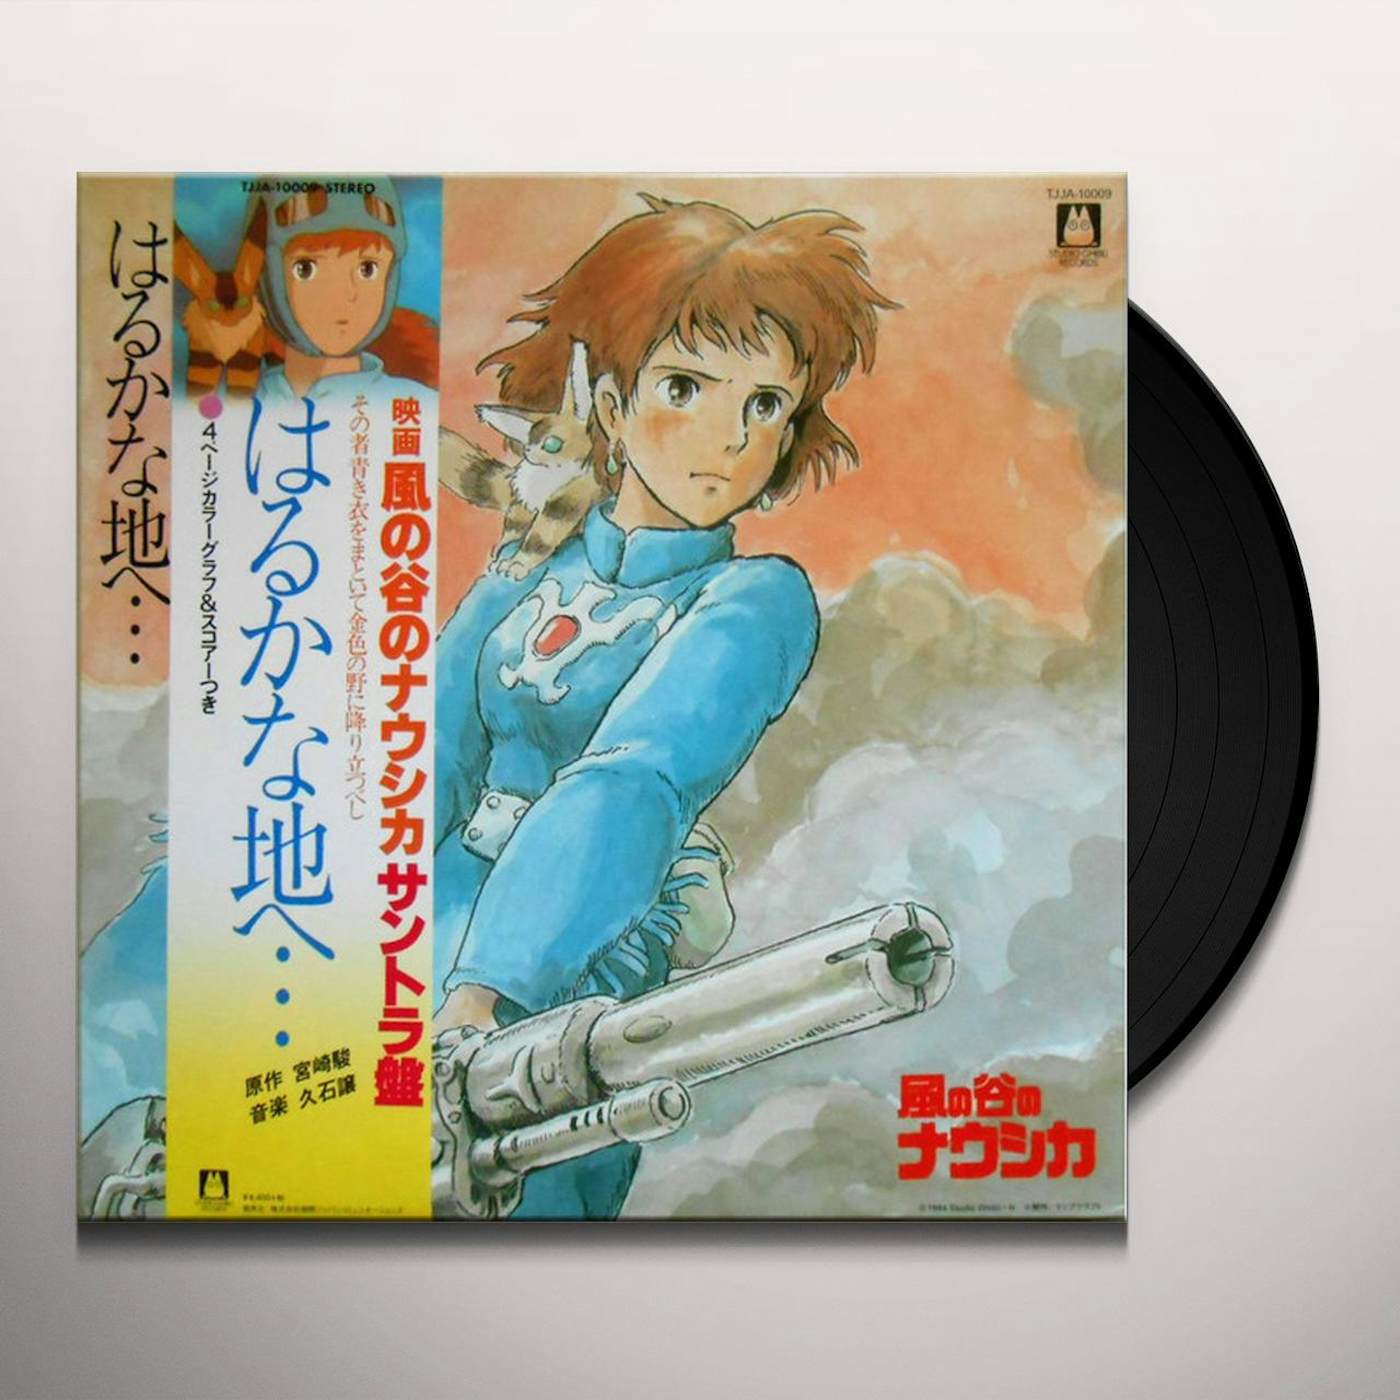 Kiki's Delivery Service: Image Album - Joe Hisaishi Vinyl-Helix Sounds